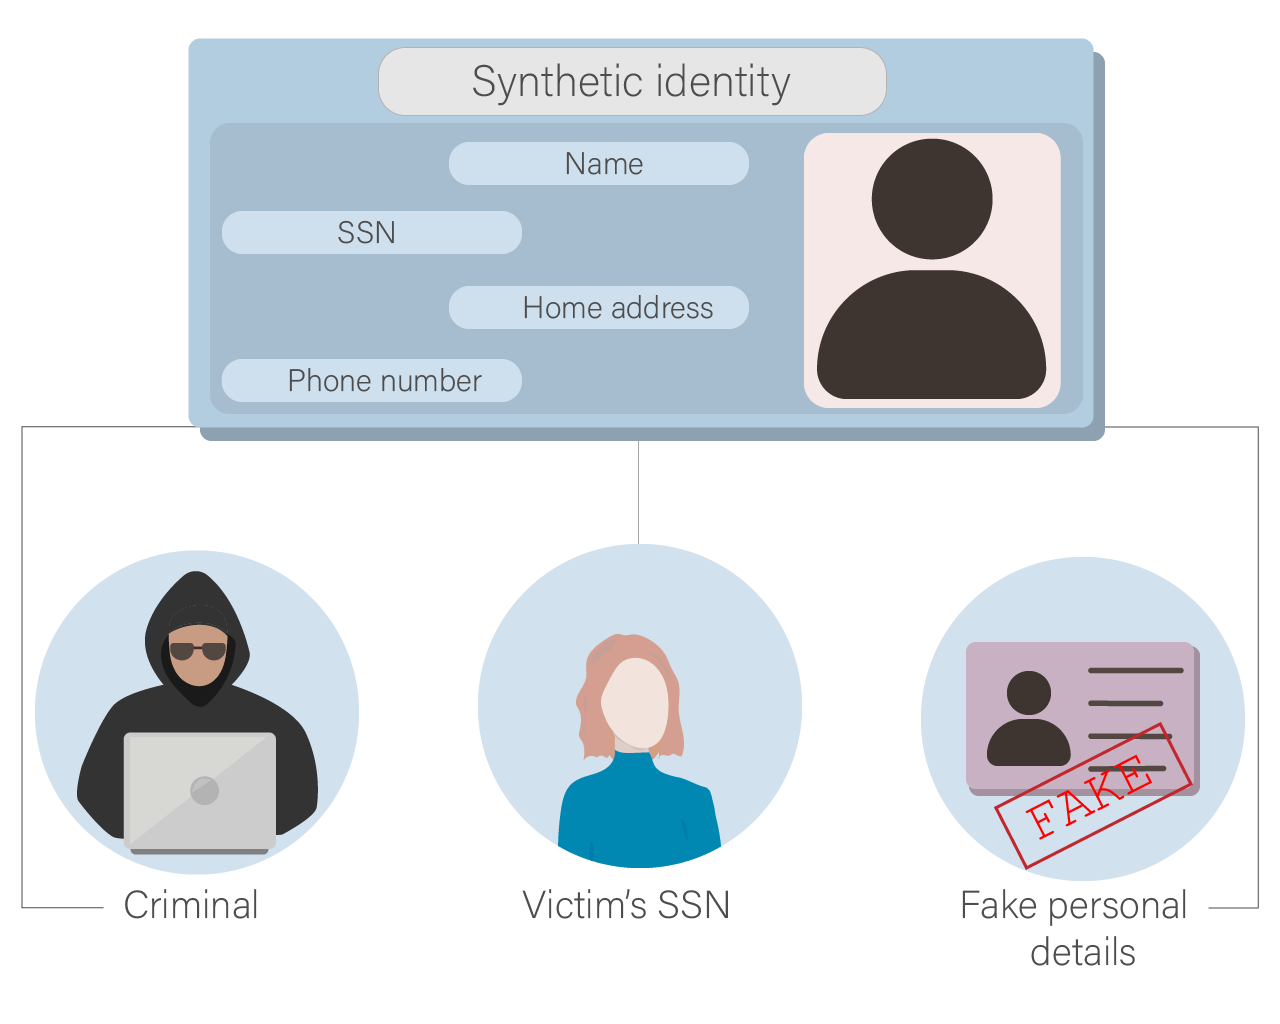 synthetic identity theft